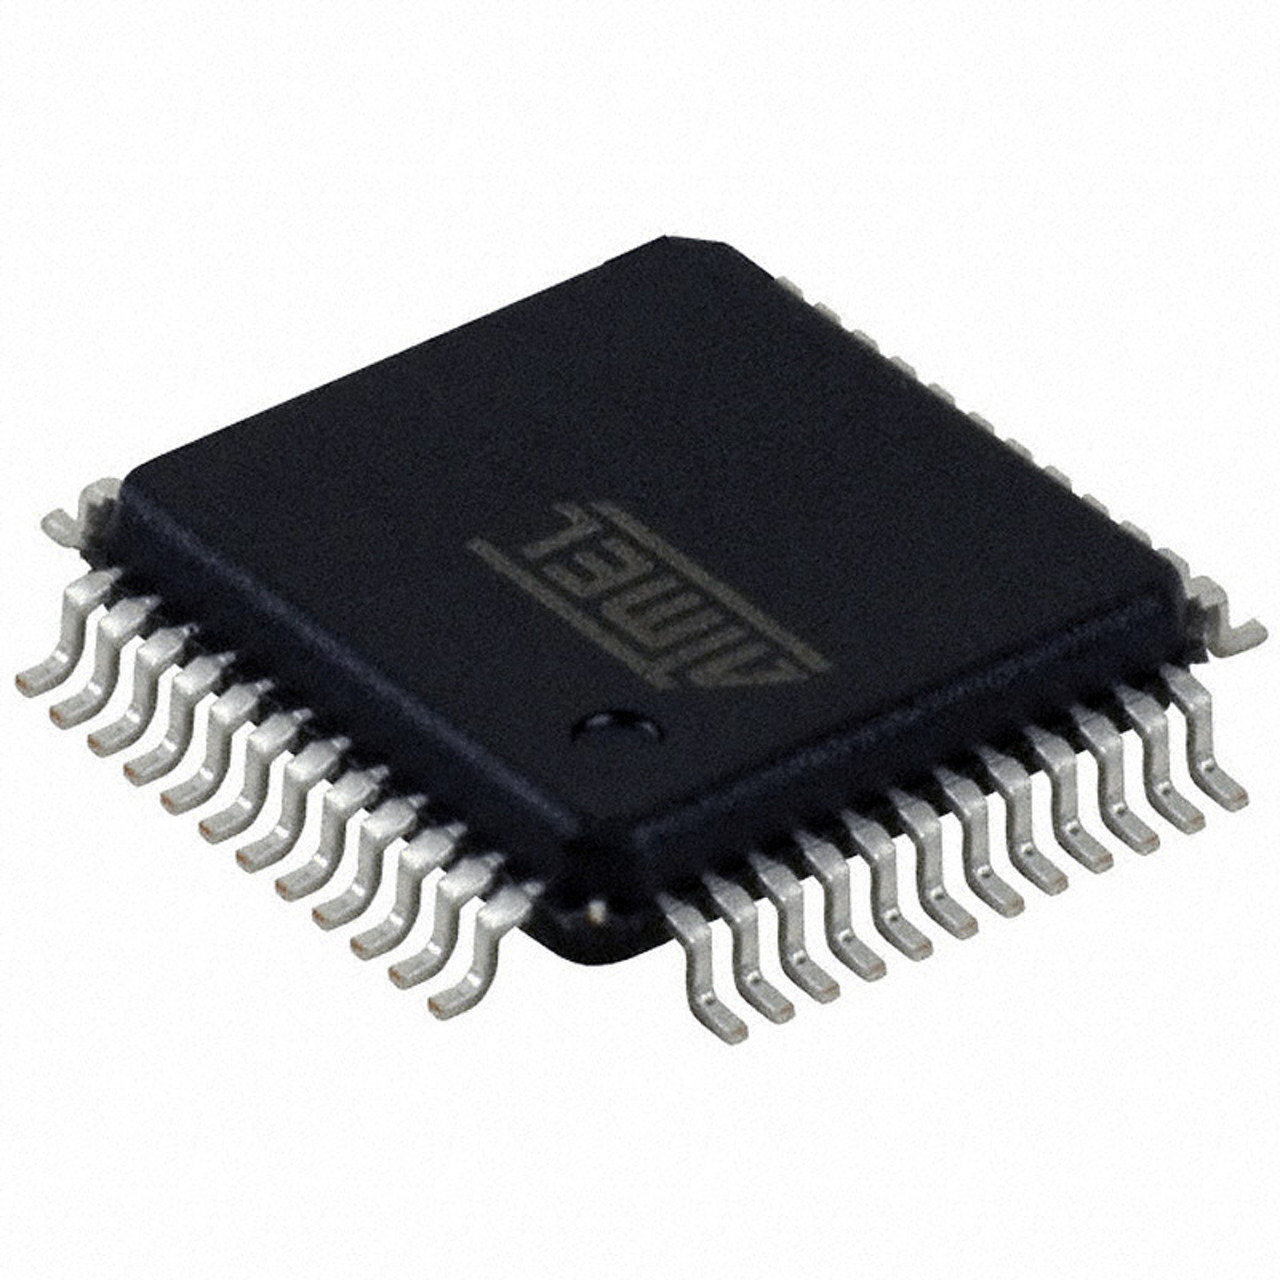 Atmel Mikrocontroller AT32UC3L032-AUT- TQFP-48 unter Komponenten